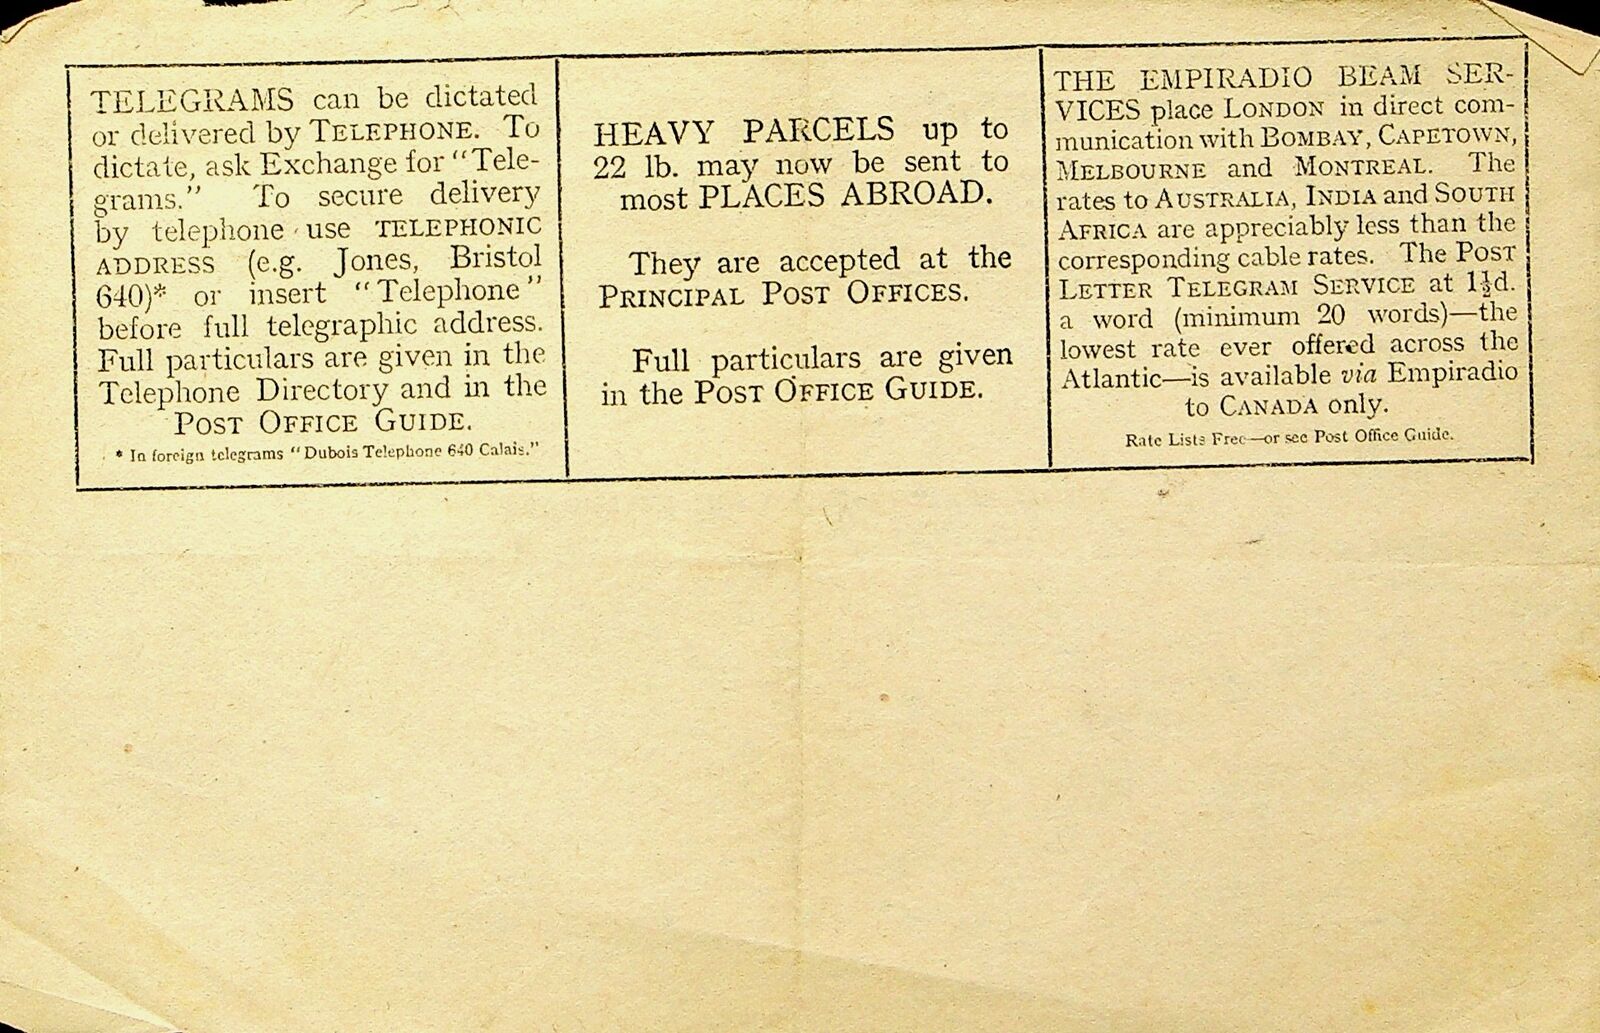 PO Telegraph Form of 9-6-1938 - back